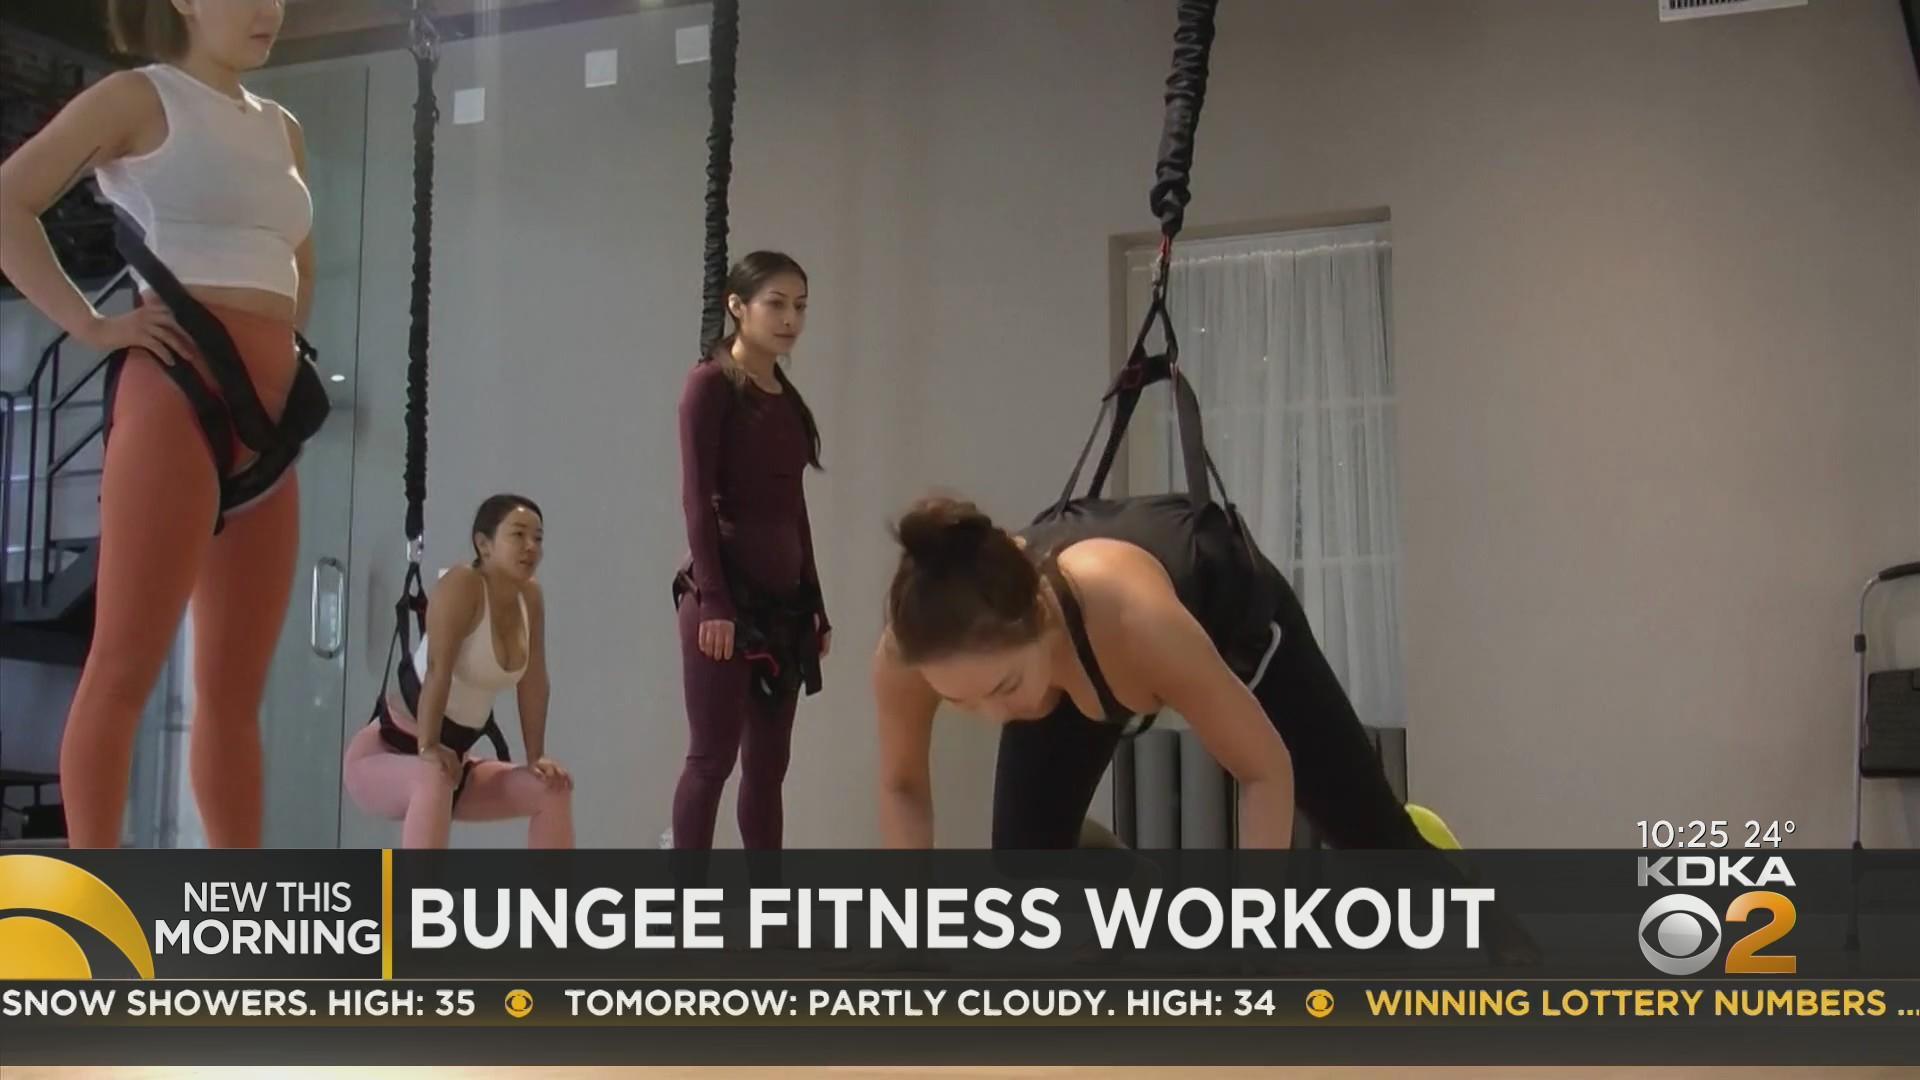 Bungee fitness becoming next popular exercise craze - CBS News